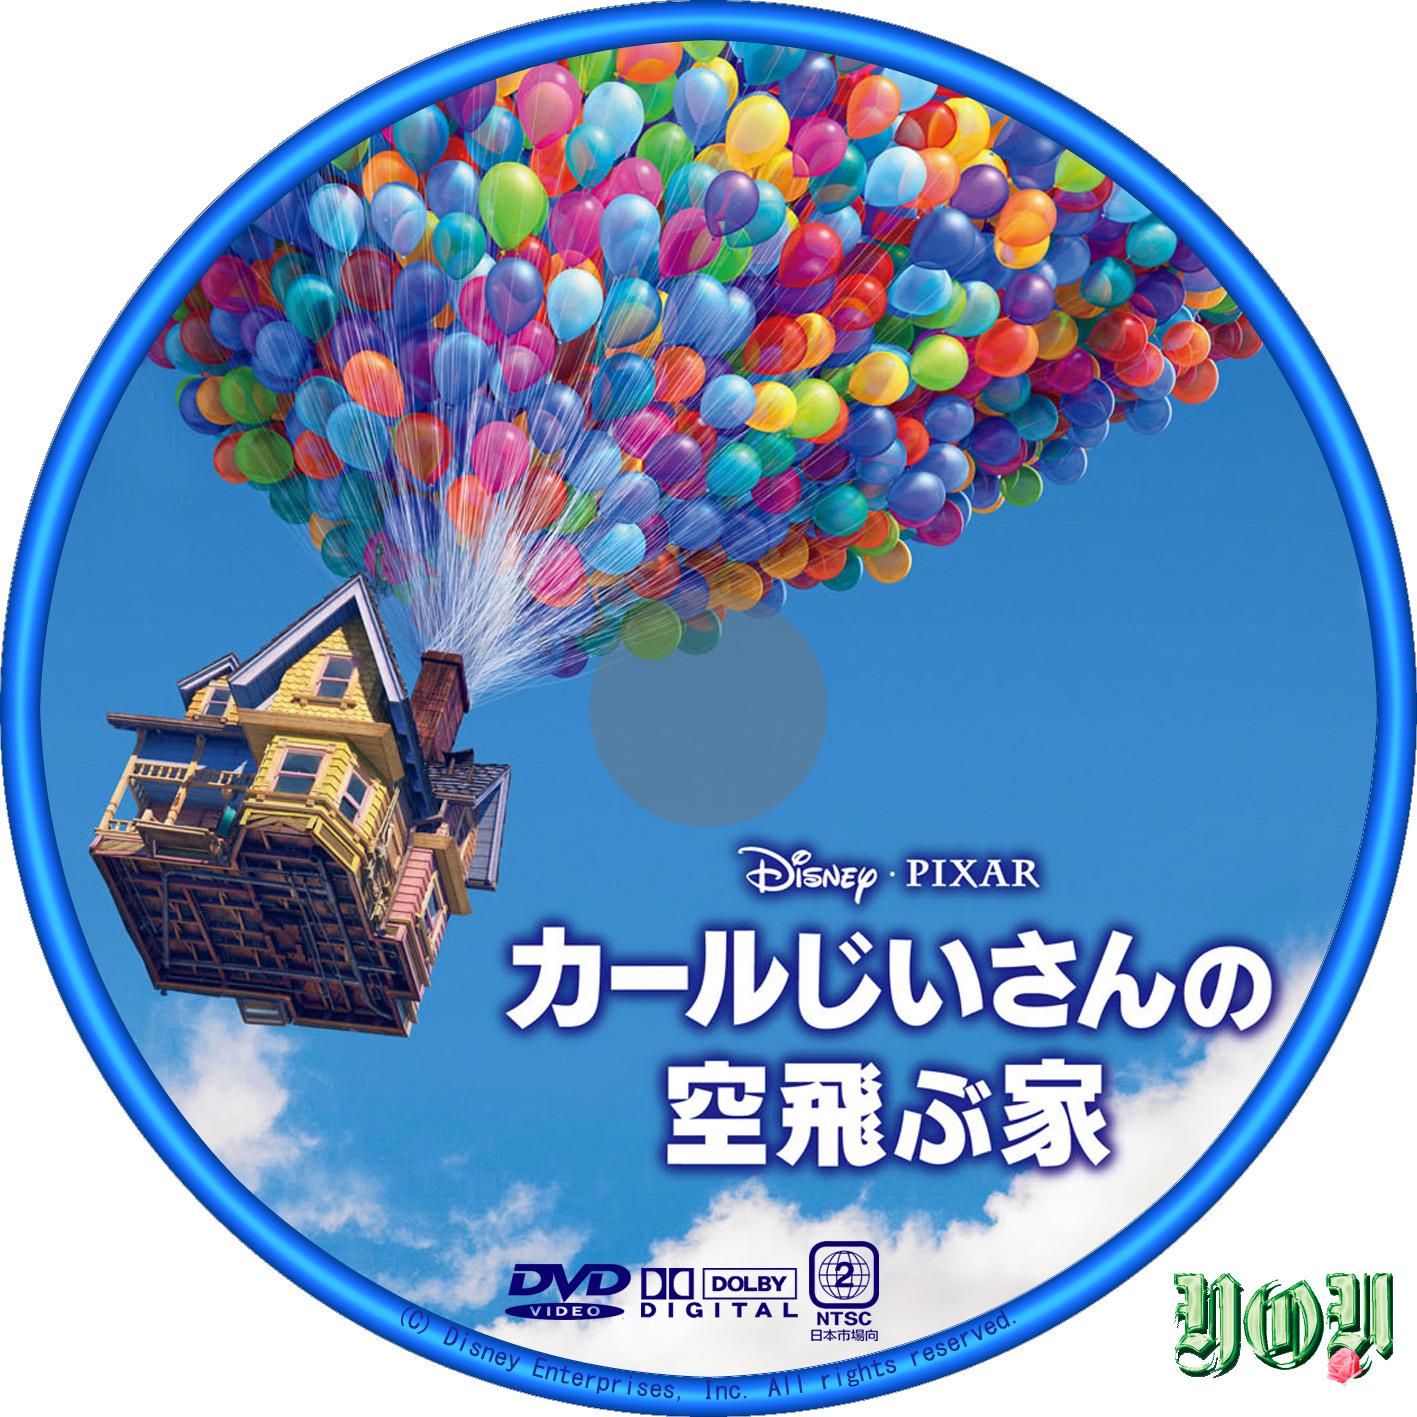 DVDソフト カールじいさんの空飛ぶ家 microSD /VWMS-1008 ウォルト・ディズニー・ジャパン 最安値: 金田天年のブログ